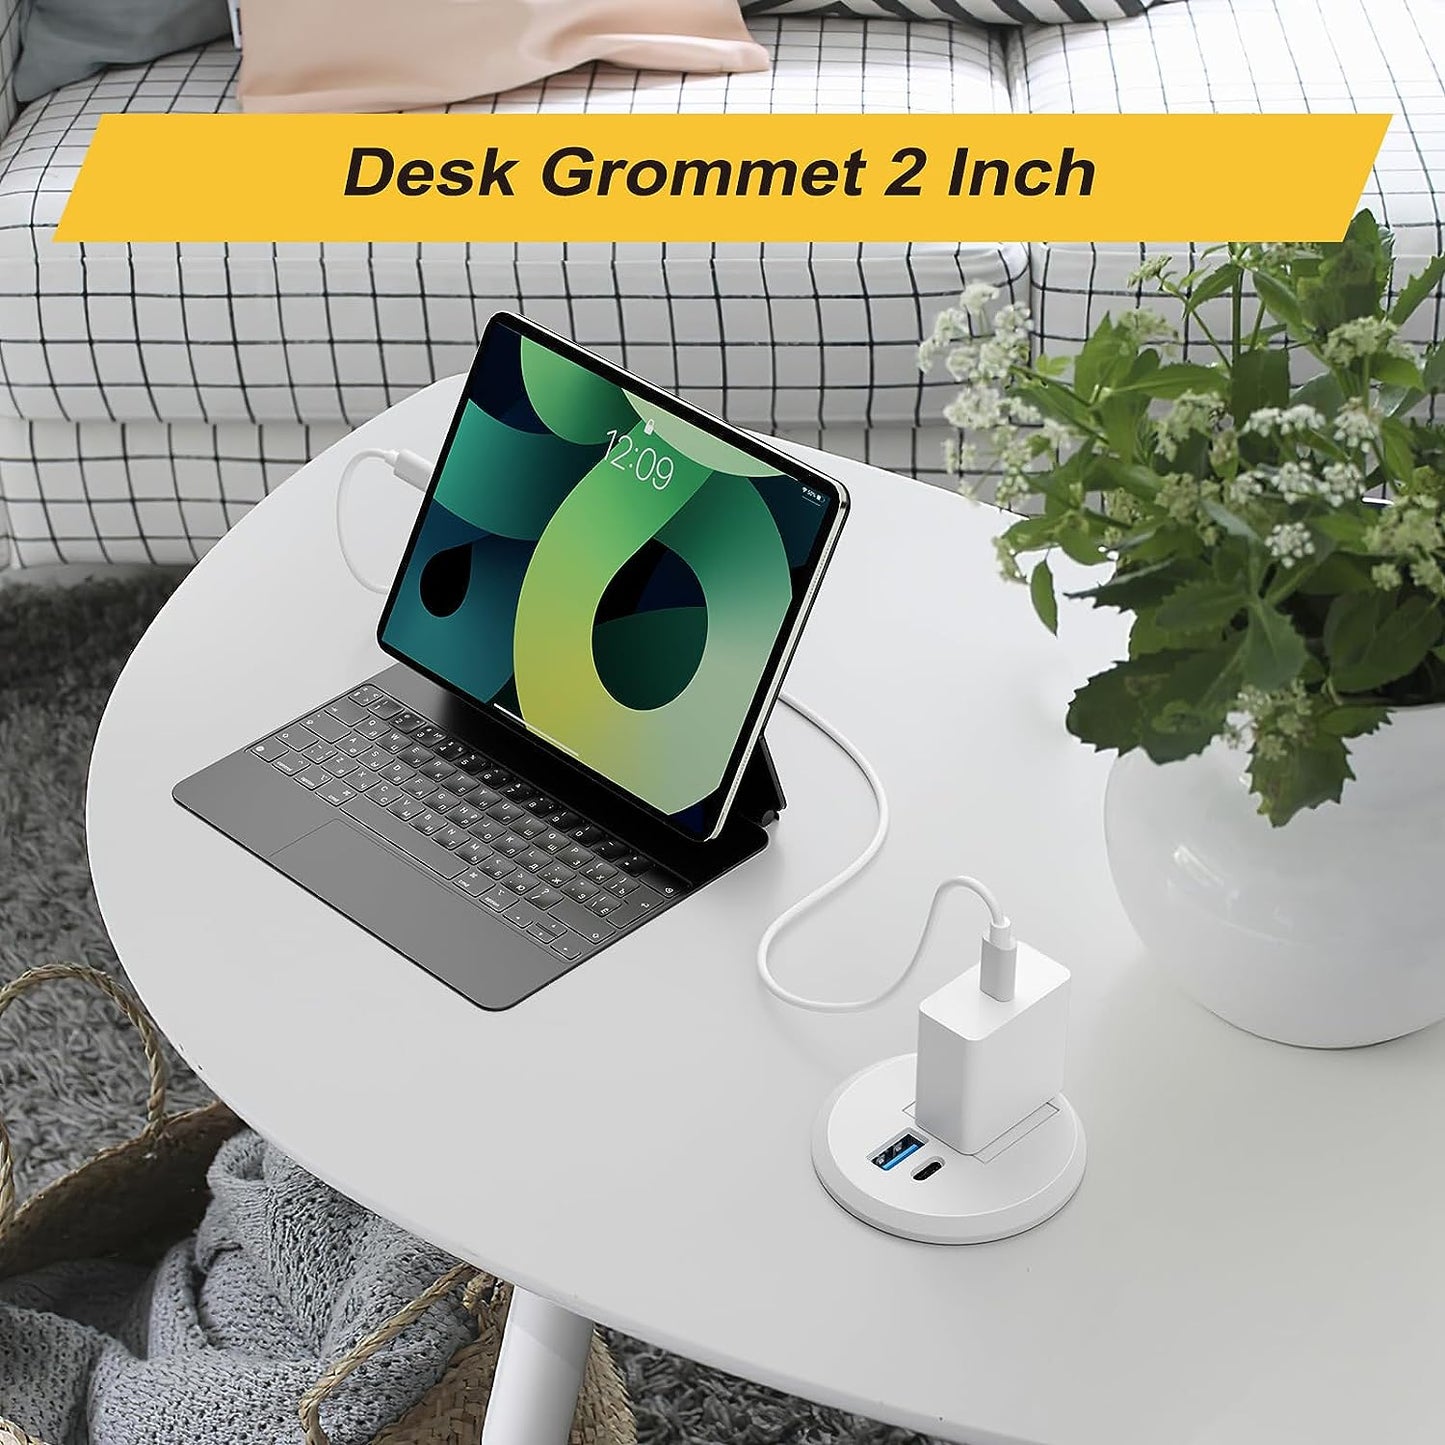 2 Inch Desk Power Grommet Power Strip